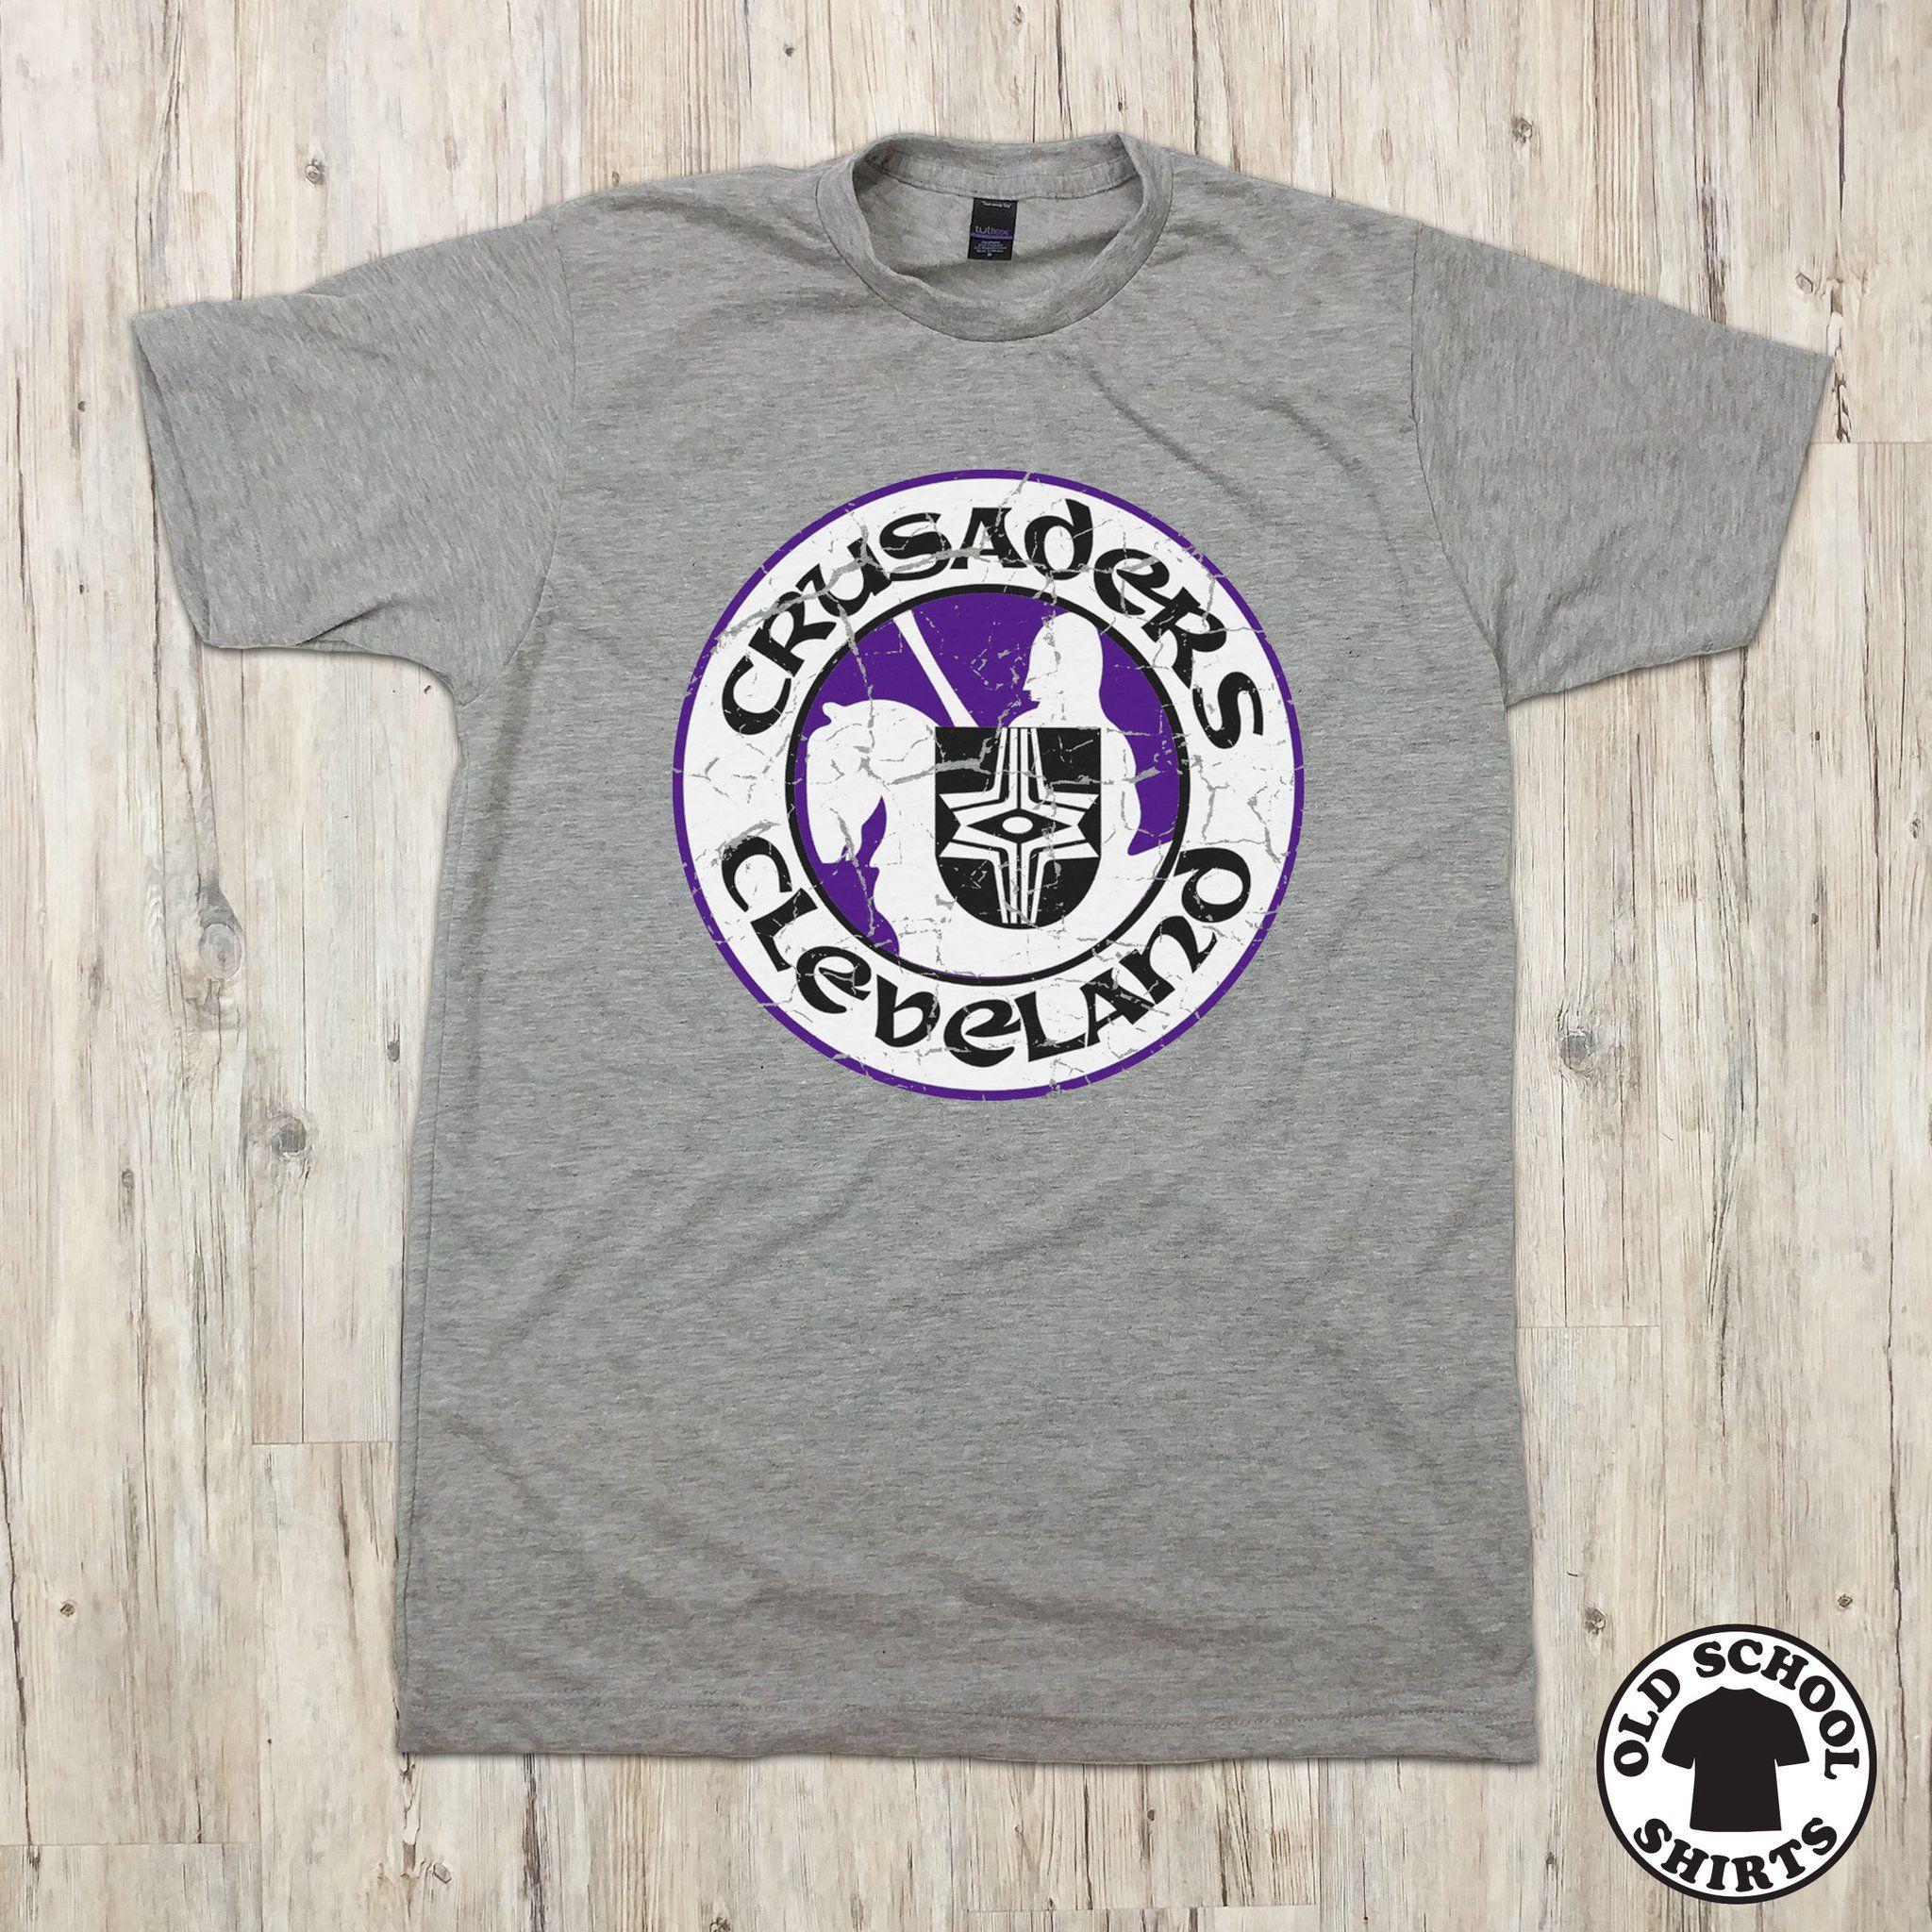 Cleveland Crusaders Logo - Cleveland Crusaders | Old School Shirts - OldSchoolShirts.com